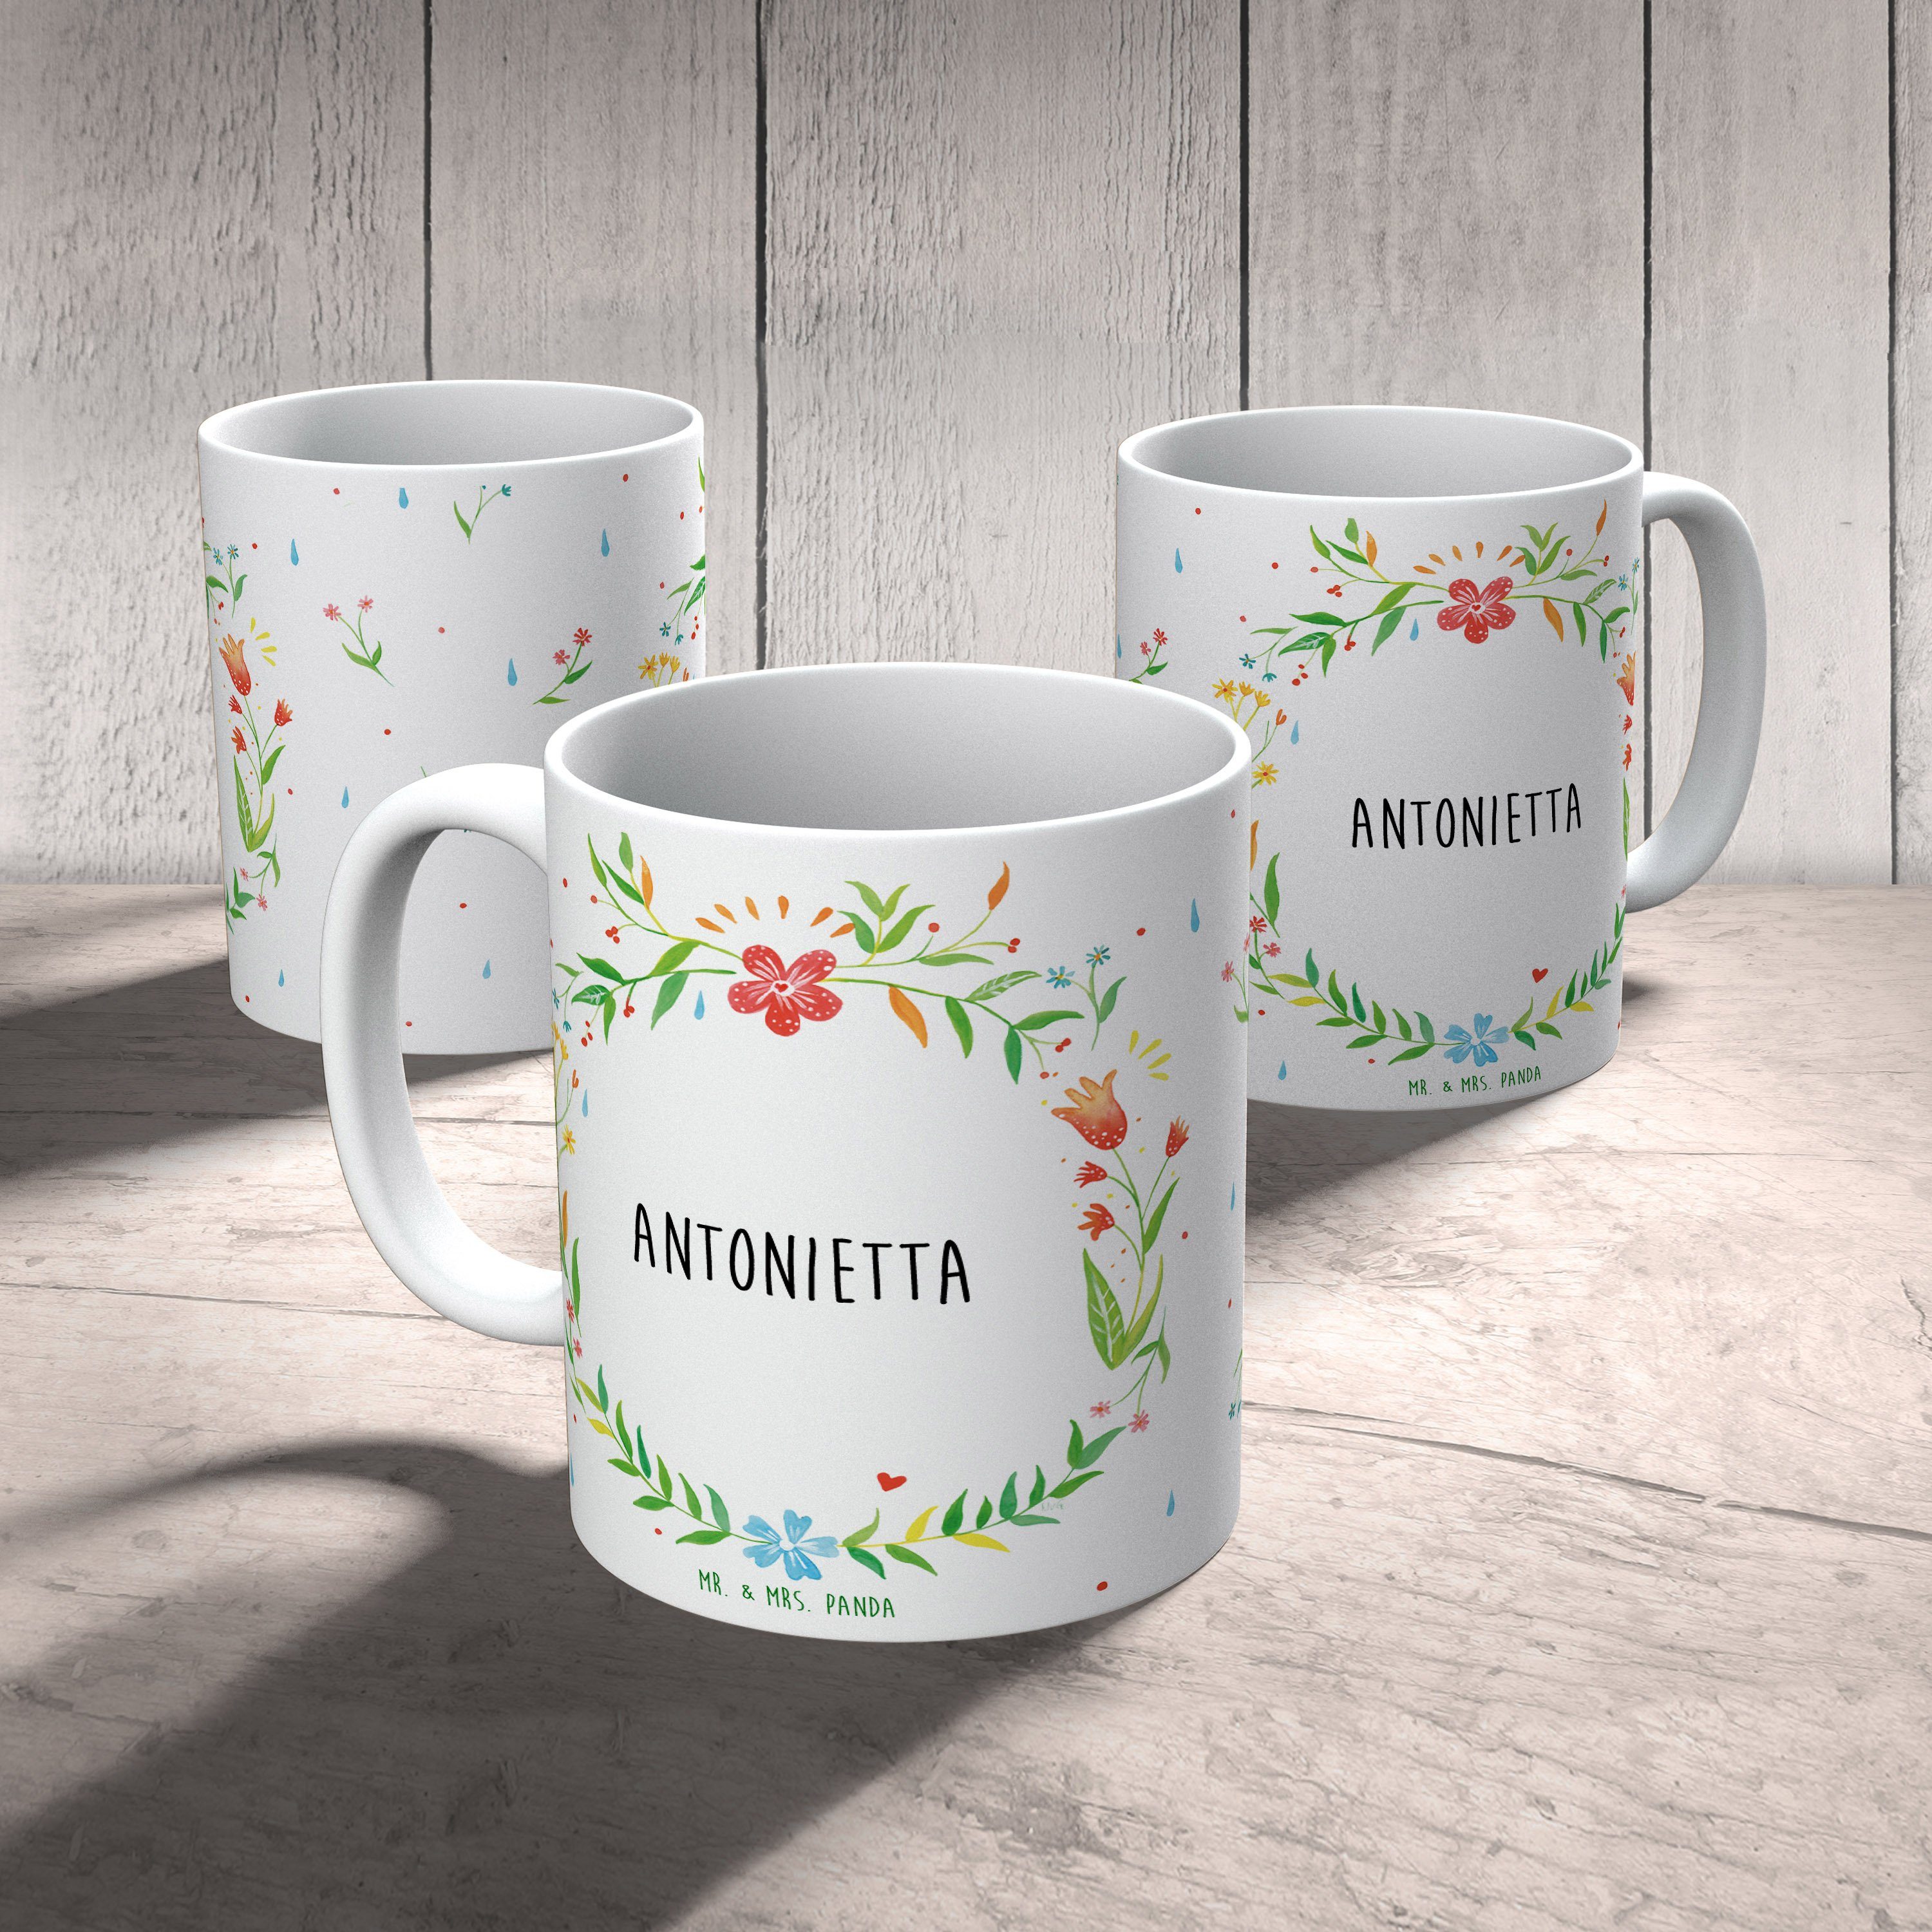 & Mrs. Büro Sprü, Geschenk, Antonietta Panda Tasse Tasse Kaffeebecher, - Mr. Tasse, Teetasse, Keramik